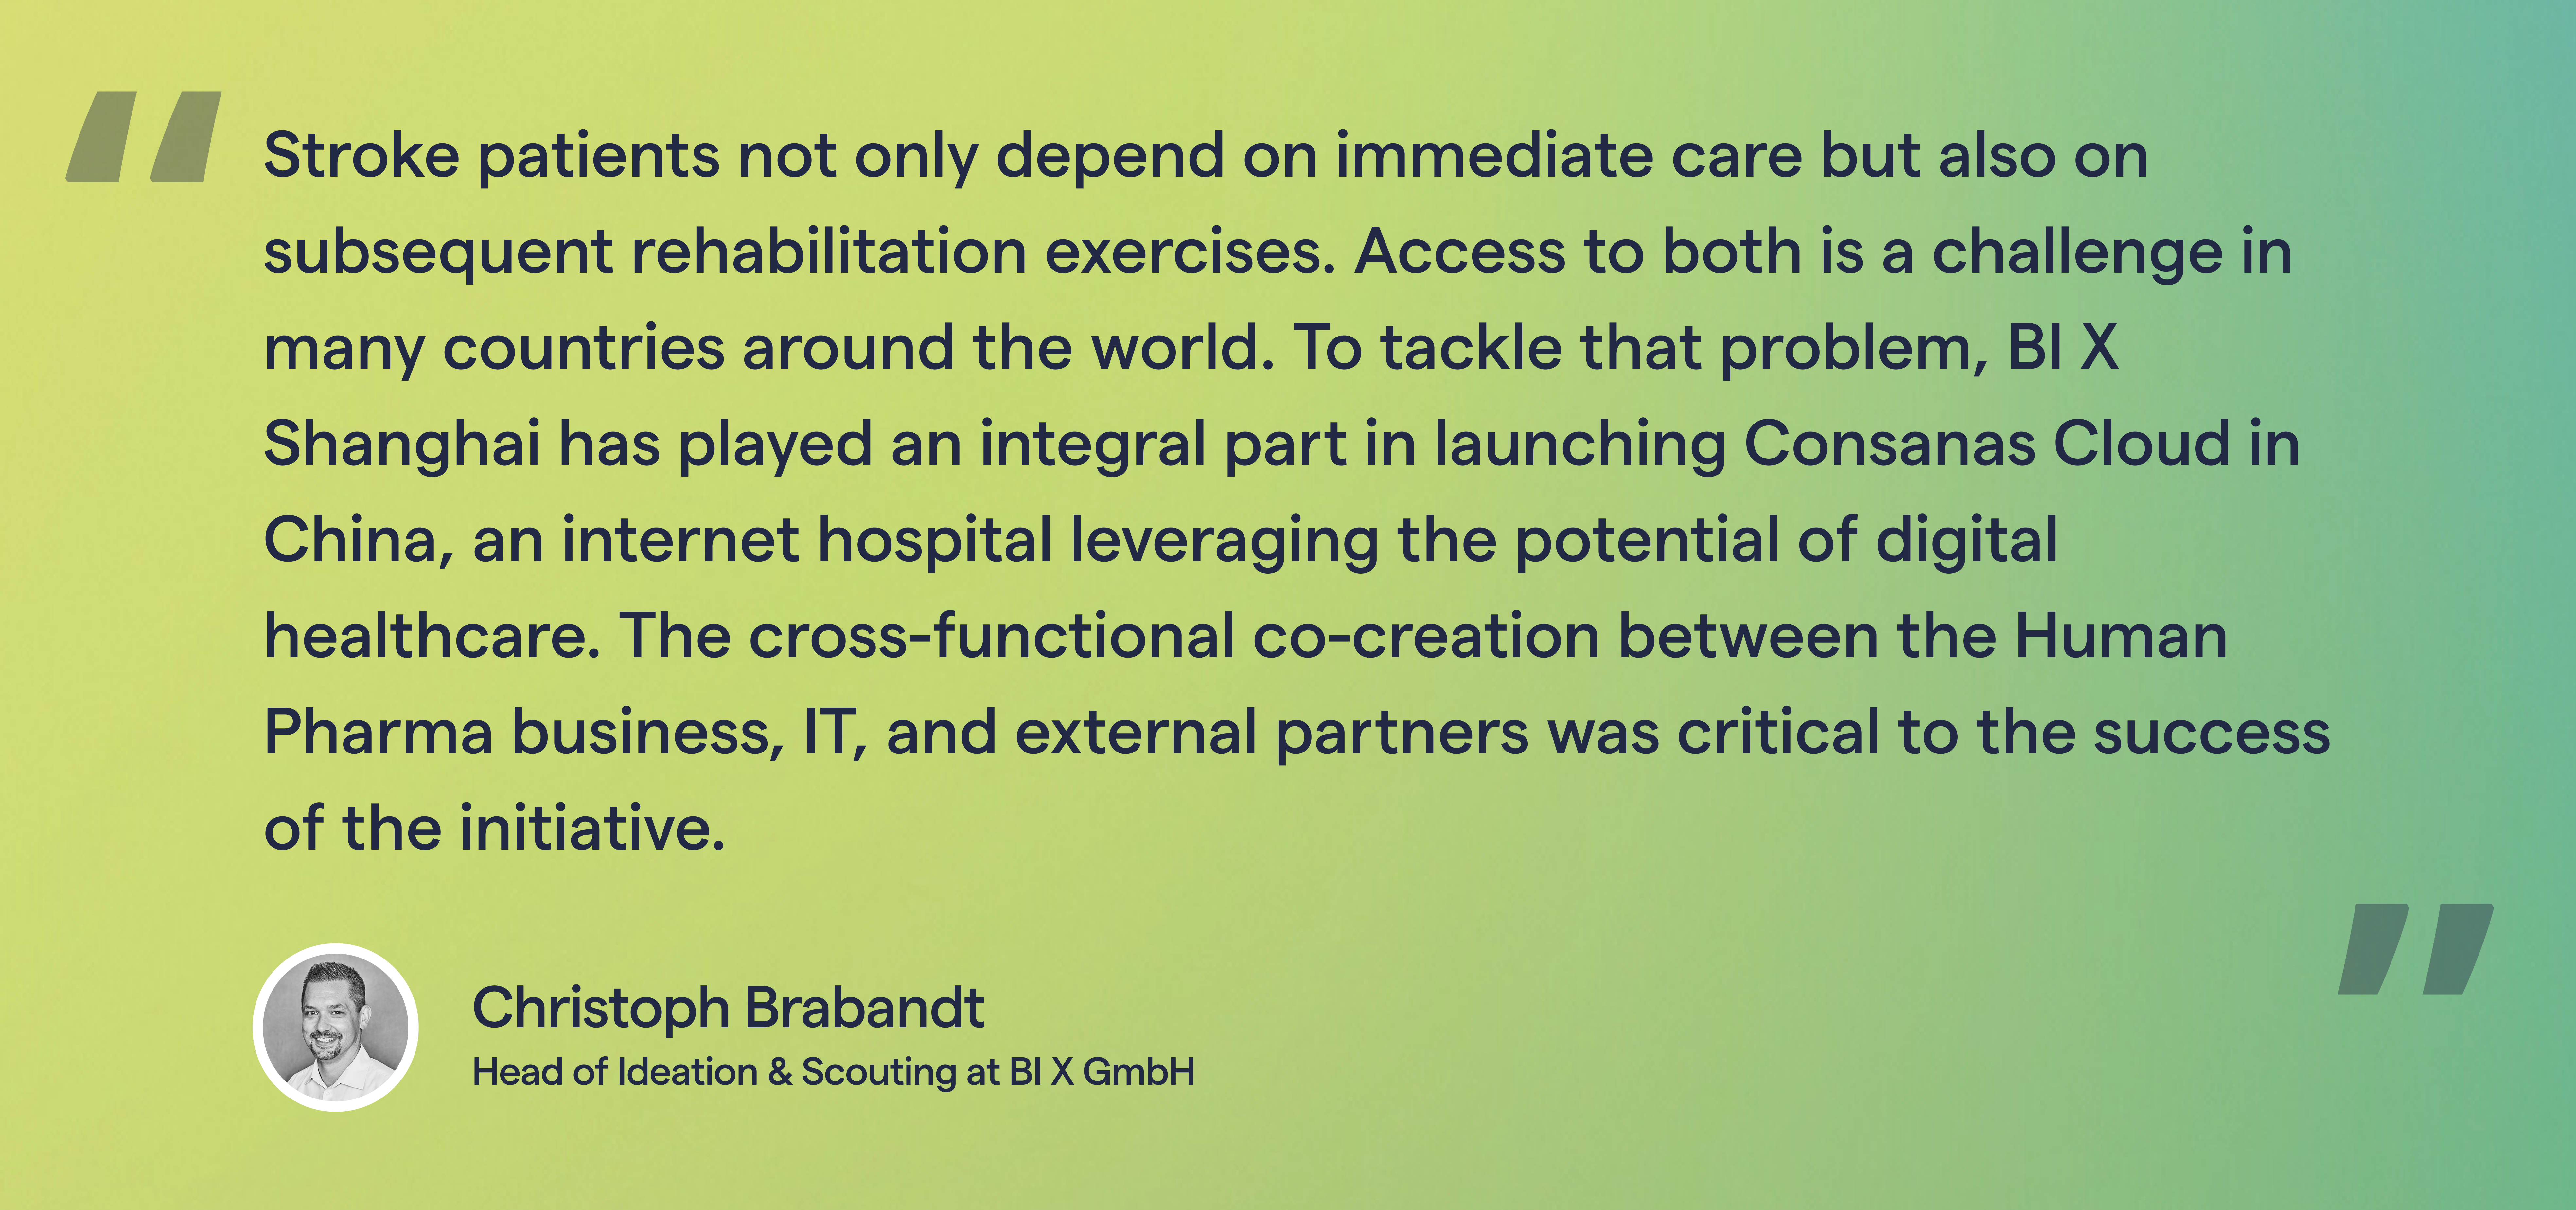 Consanas Cloud - BI X Shanghai's solution to address the challenges of stroke rehabilitation through digital healthcare. 